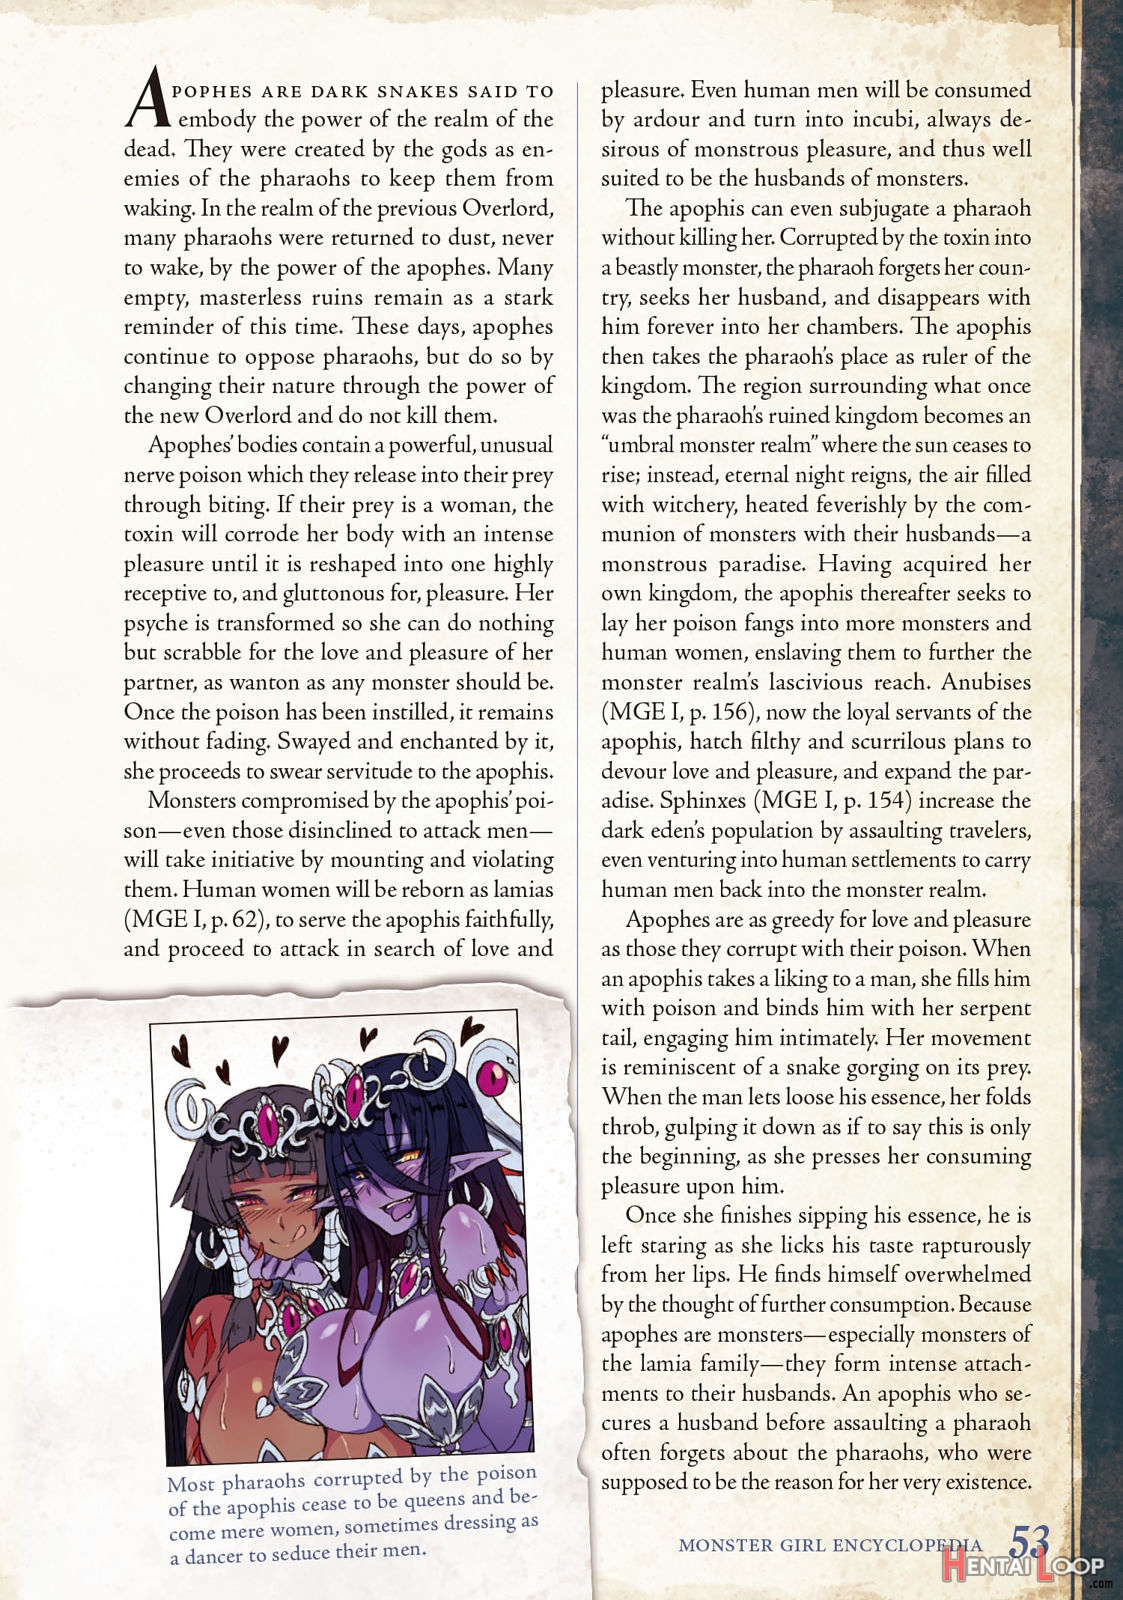 Monster Girl Encyclopedia Vol. 2 page 54